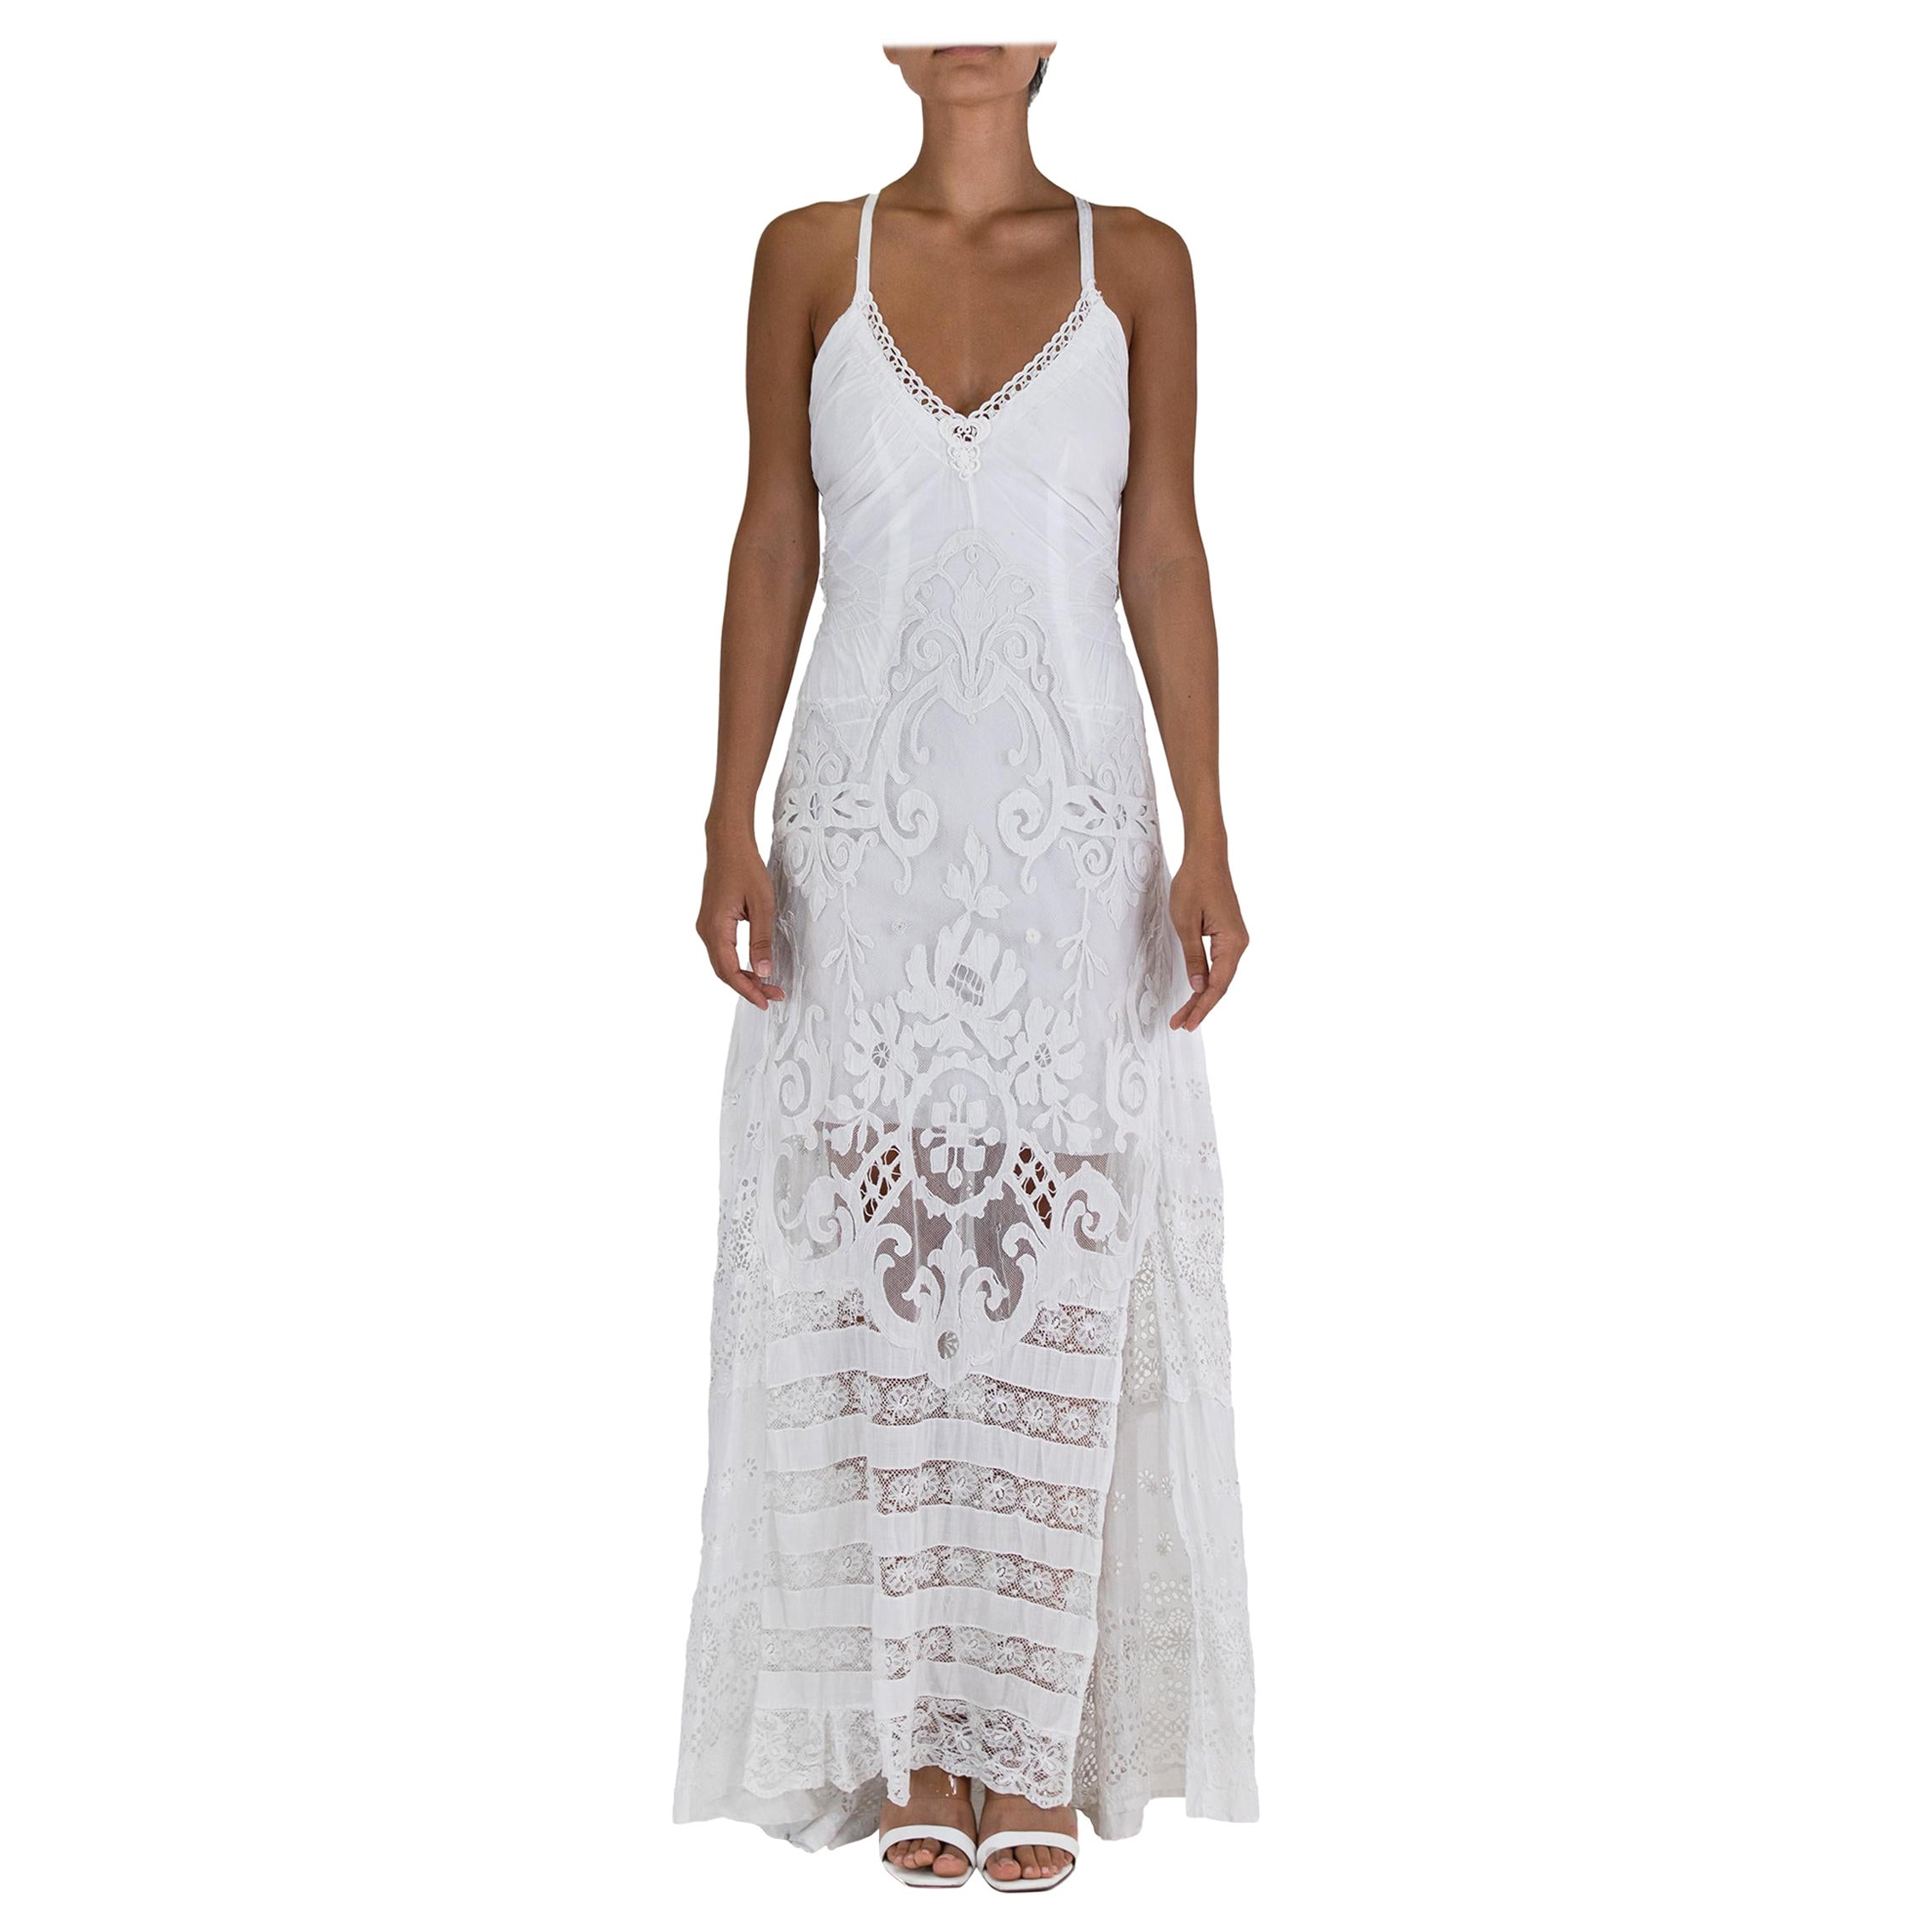 Morphew Atelier White Vintage Lace Dress For Sale